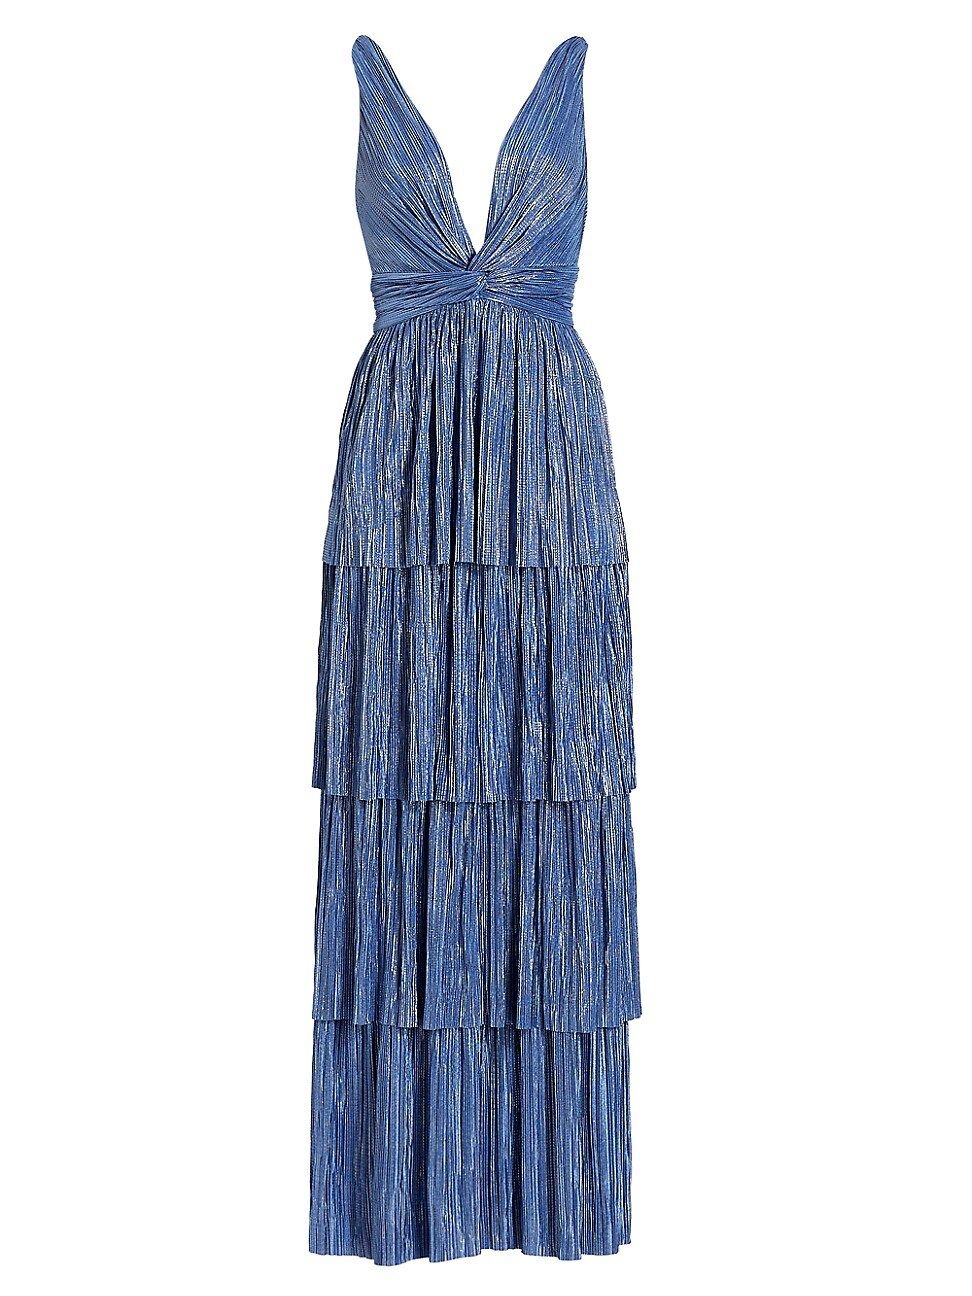 Delphine Tiered Metallic Gown | Saks Fifth Avenue